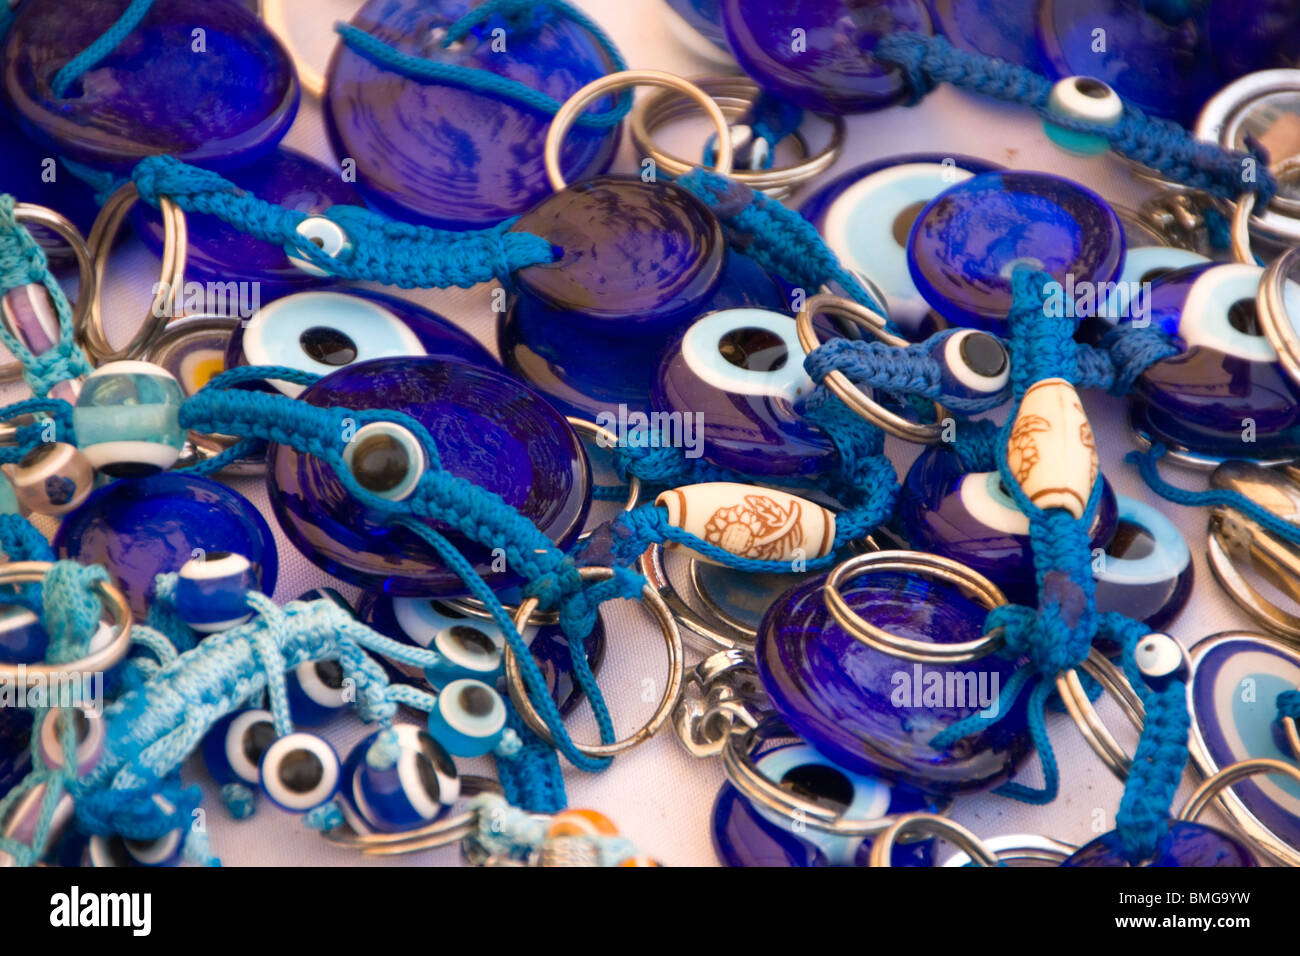 Turquía Manavgat Antalya - Mercado - cristal "blue eye" amuleto llaveros, pulseras, etc. Foto de stock